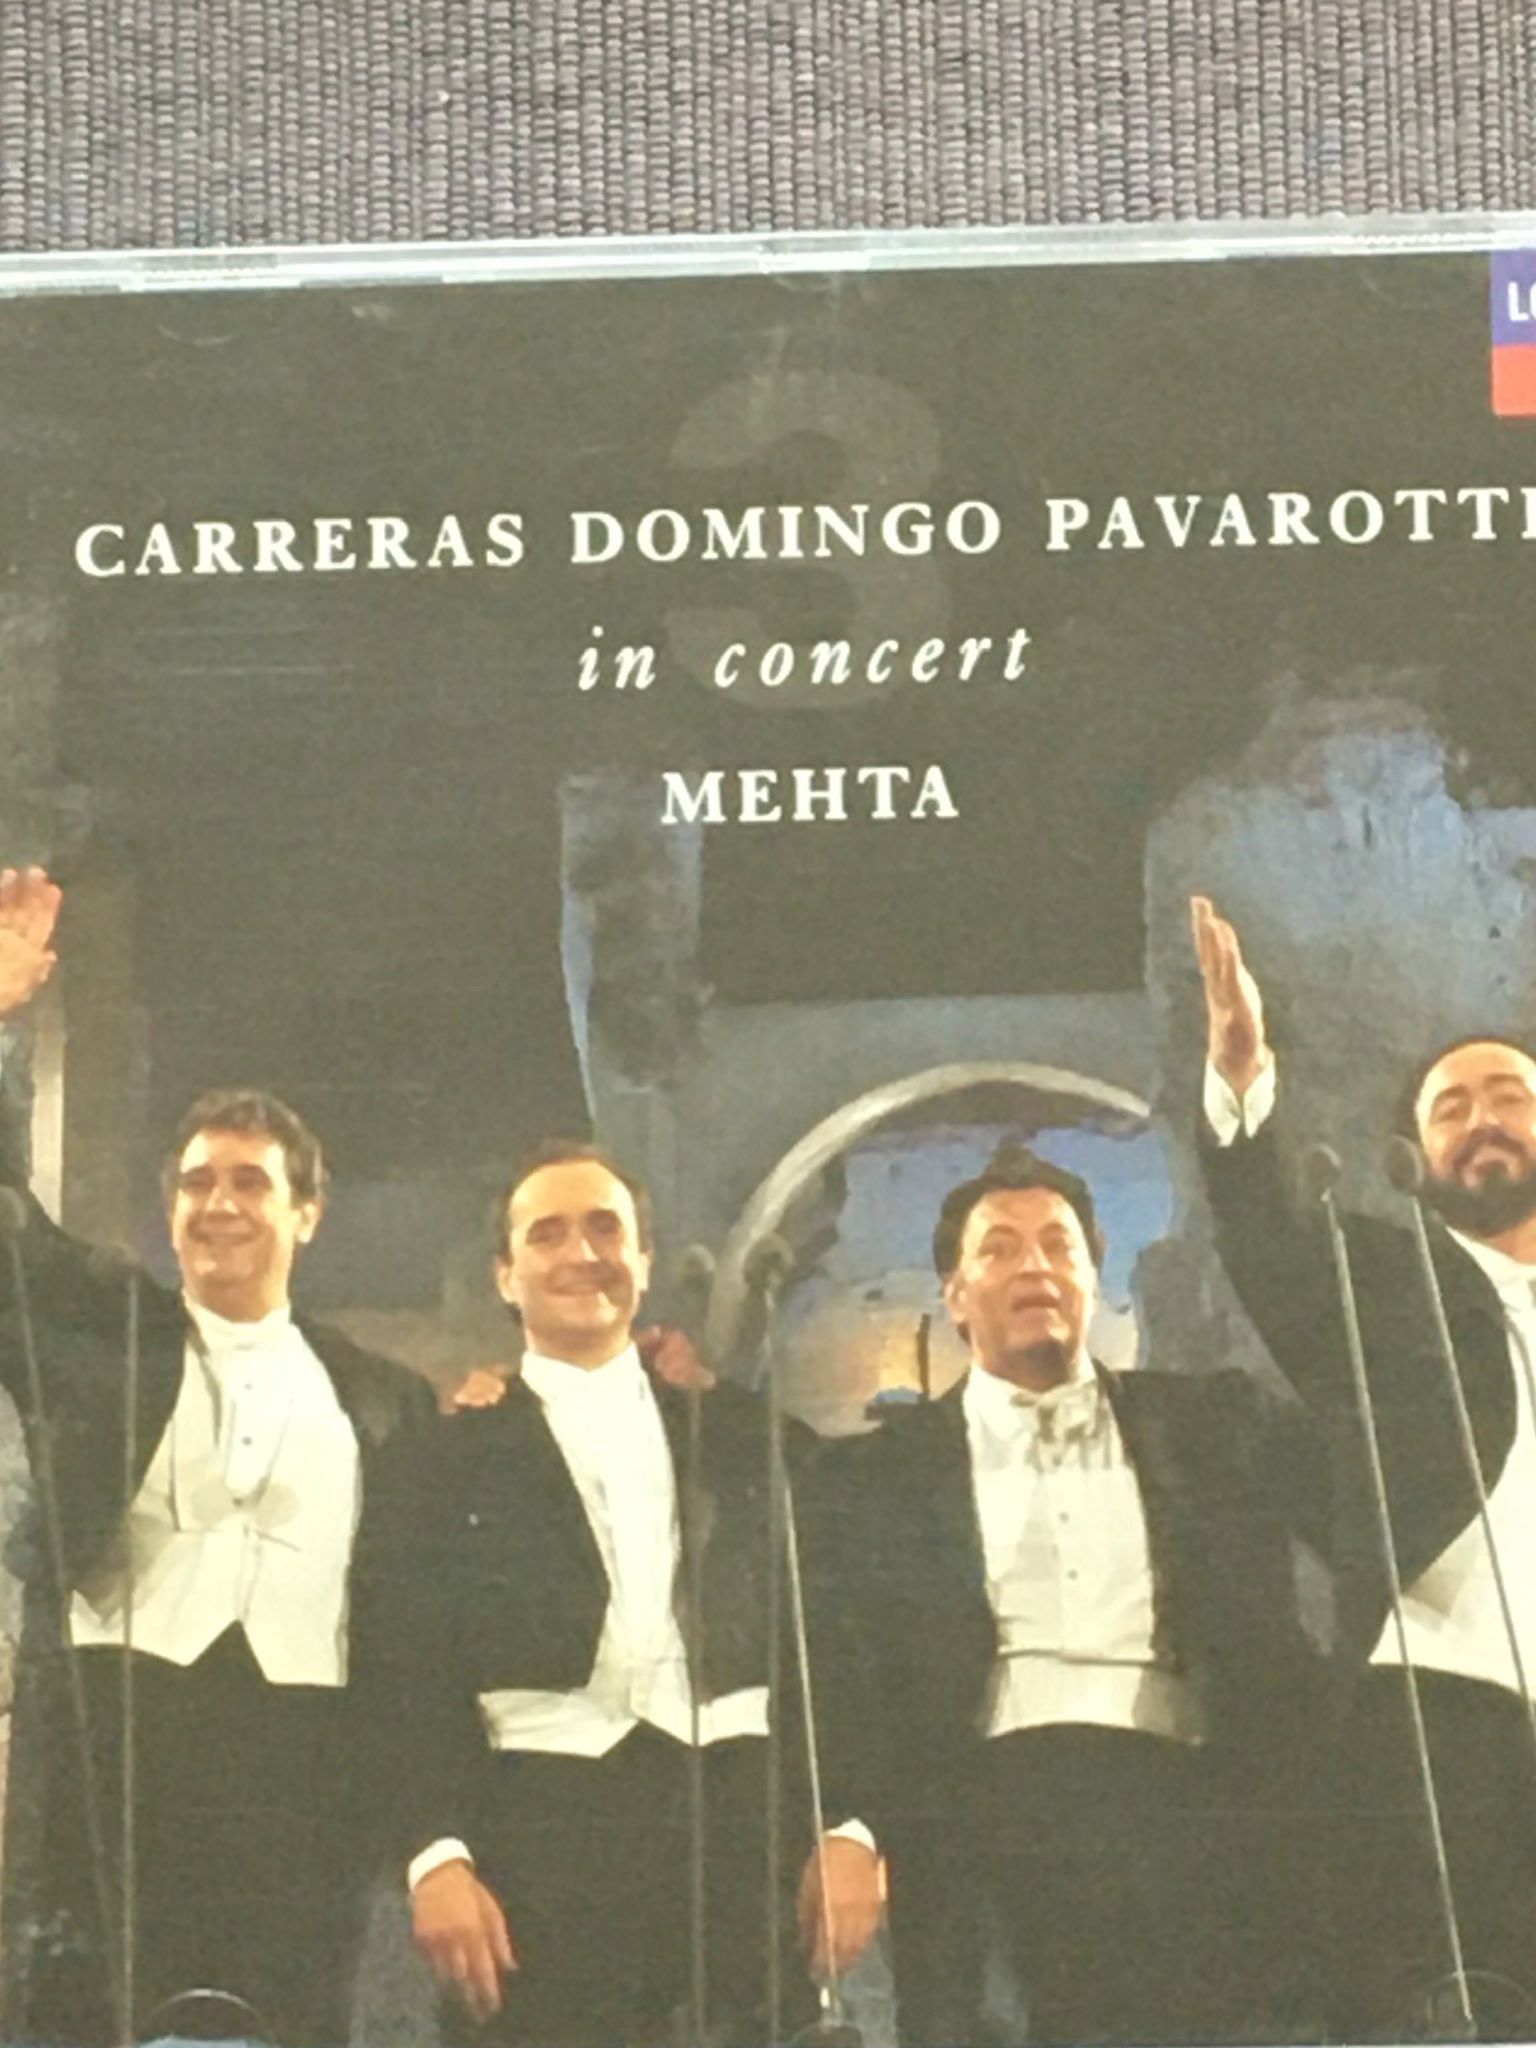 The Three Tenors In Concert original CD music new condition. Carreras, Domingo and Pavarotti with Zubin Mehta conducting.